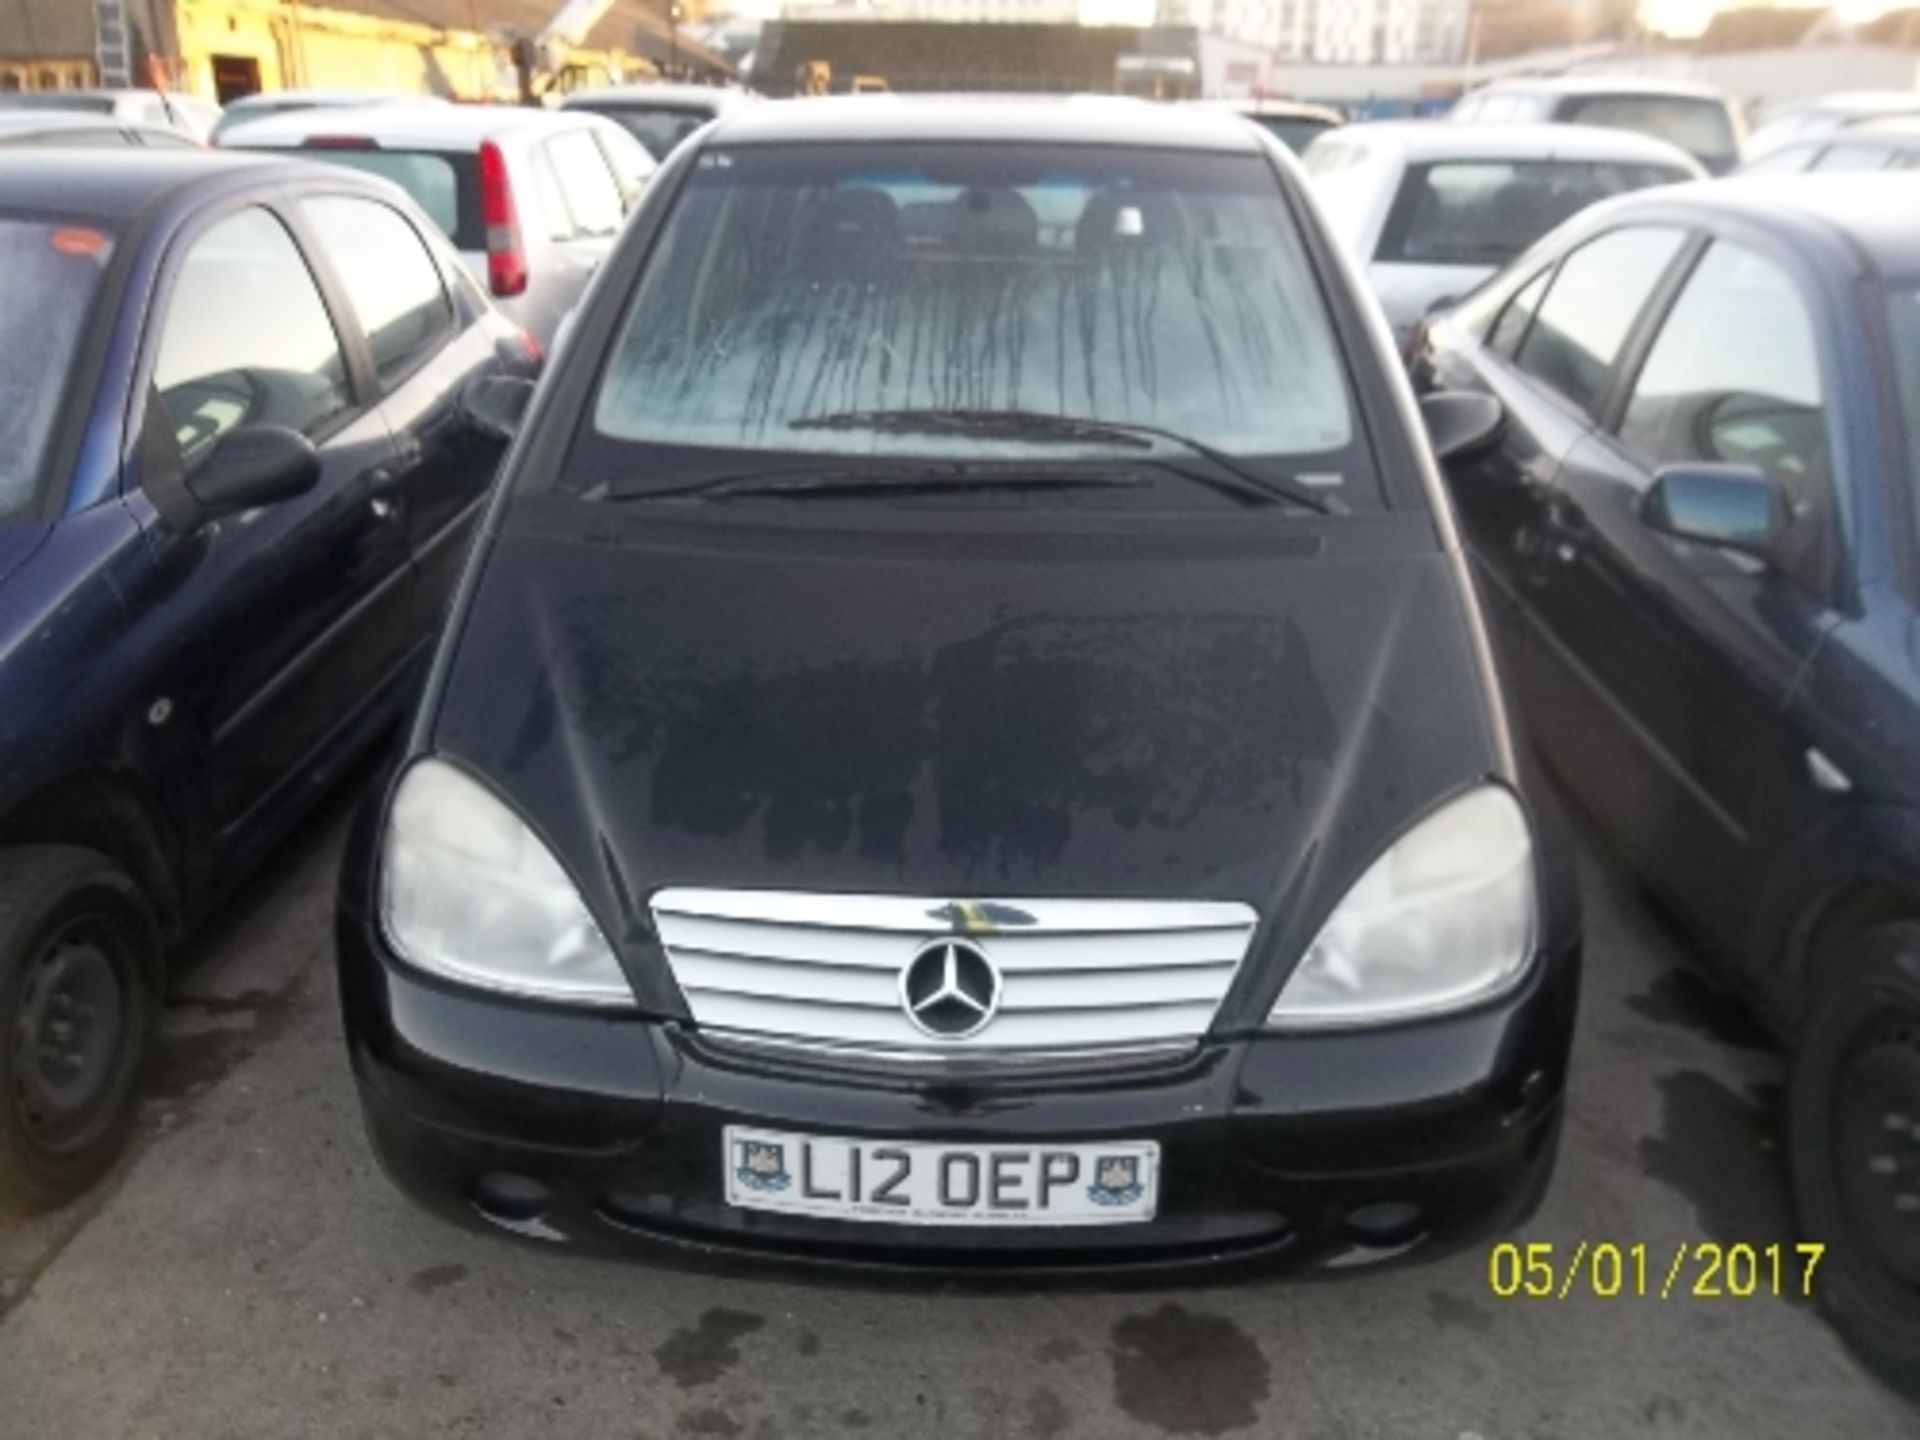 Mercedes A190 Avantgarde - L12 OEP Date of registration: 30.06.2000 1898cc, petrol, manual, black